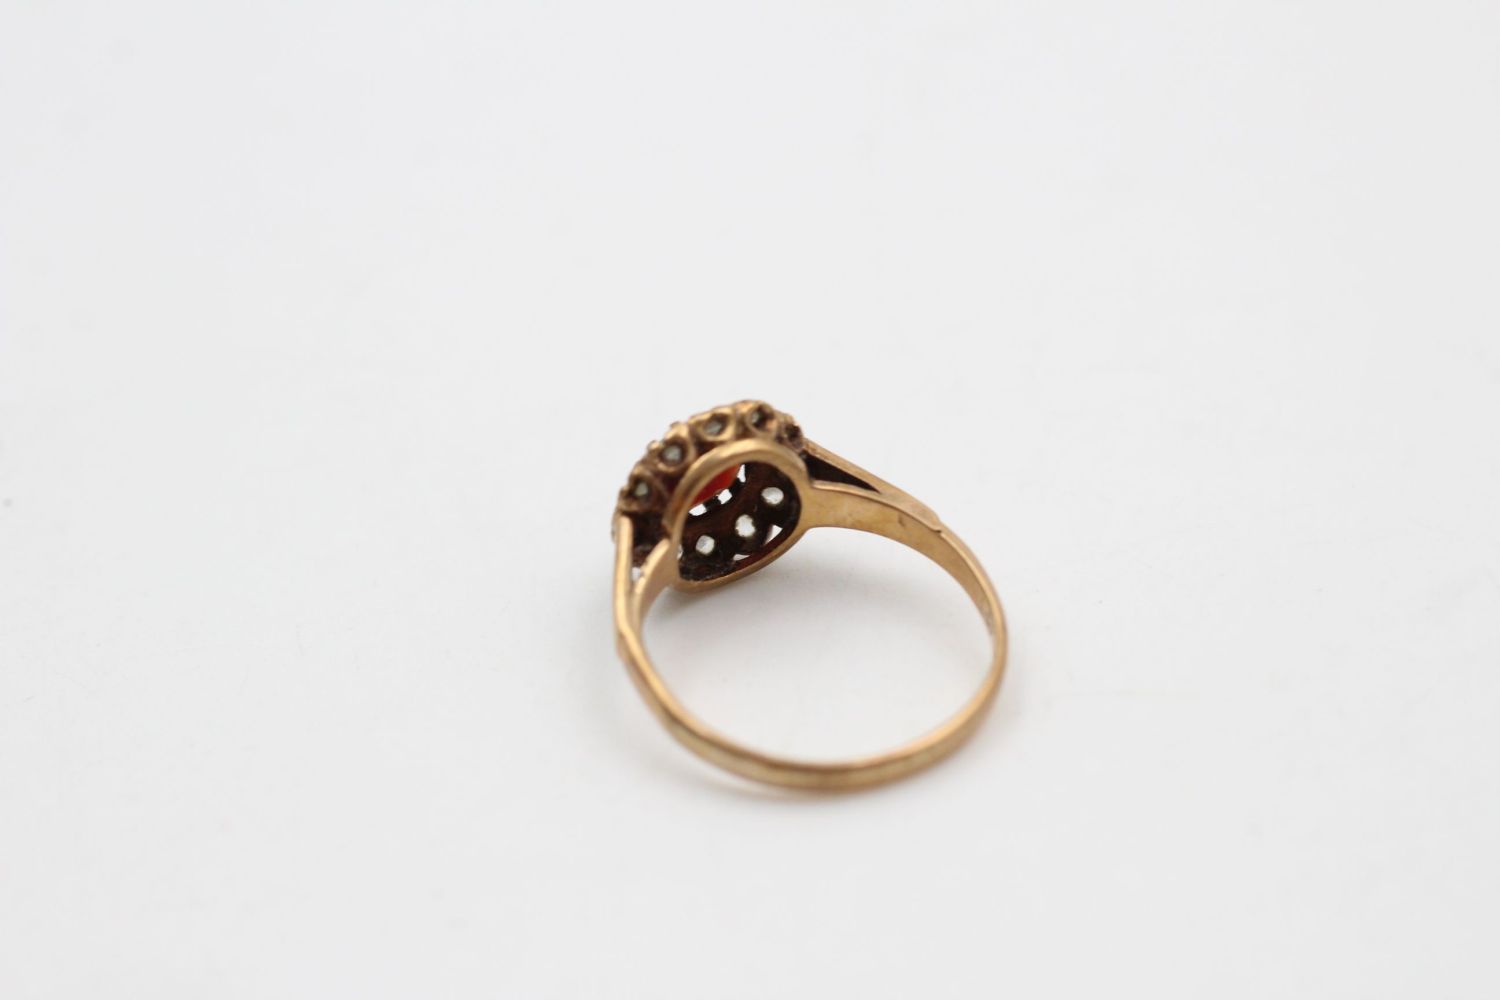 vintage 9ct gold garnet & gemstone halo ring 2.2 grams gross - Image 5 of 5